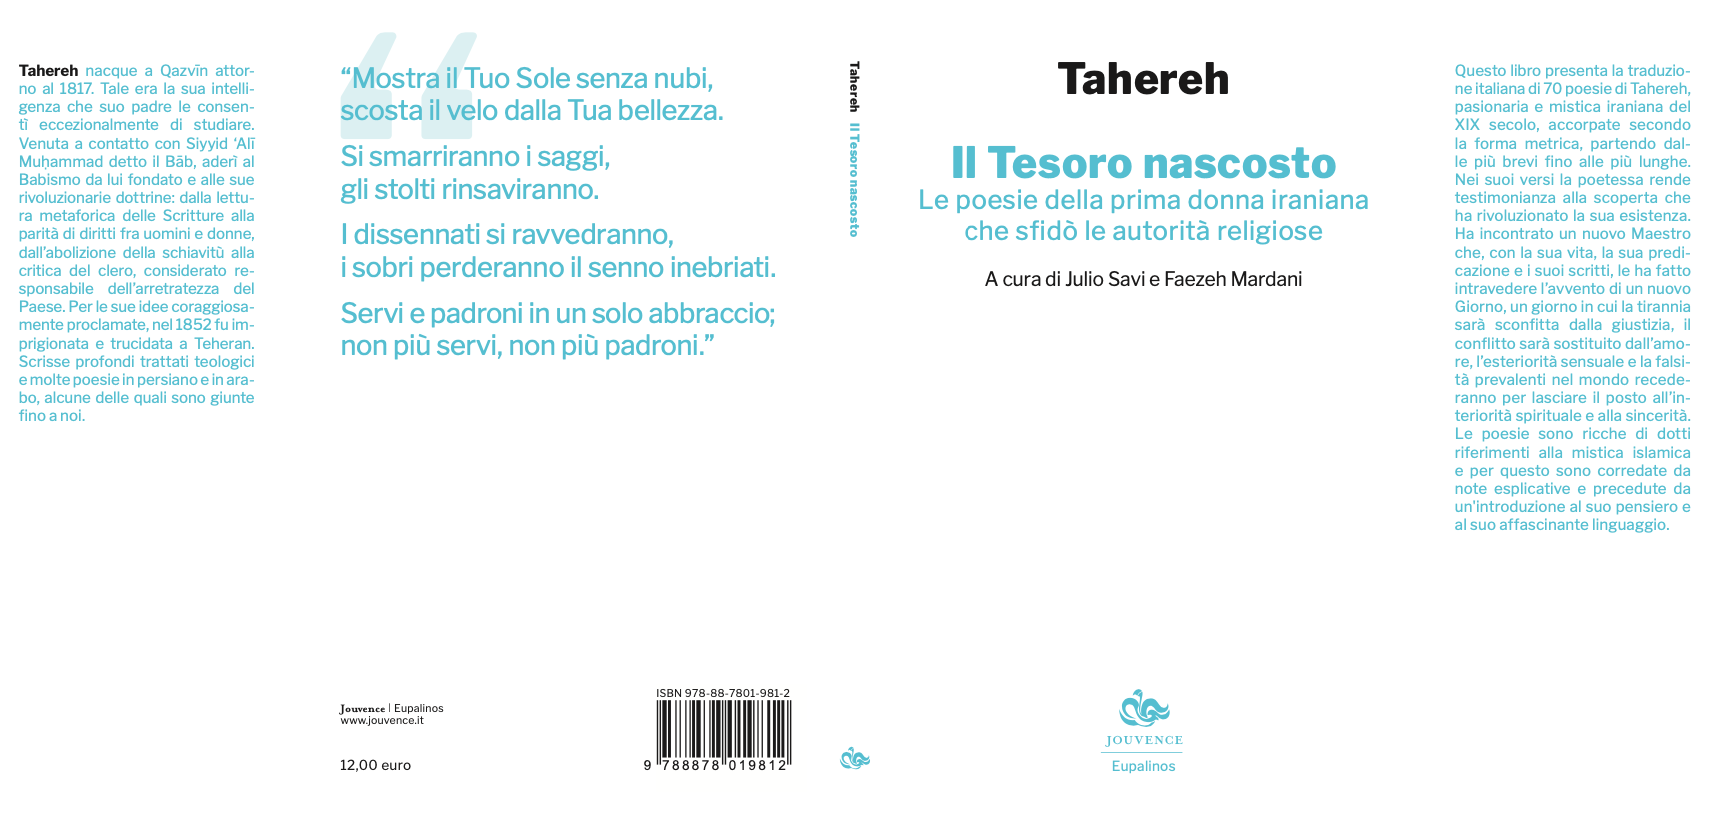 poetessa iraniana Tahereh